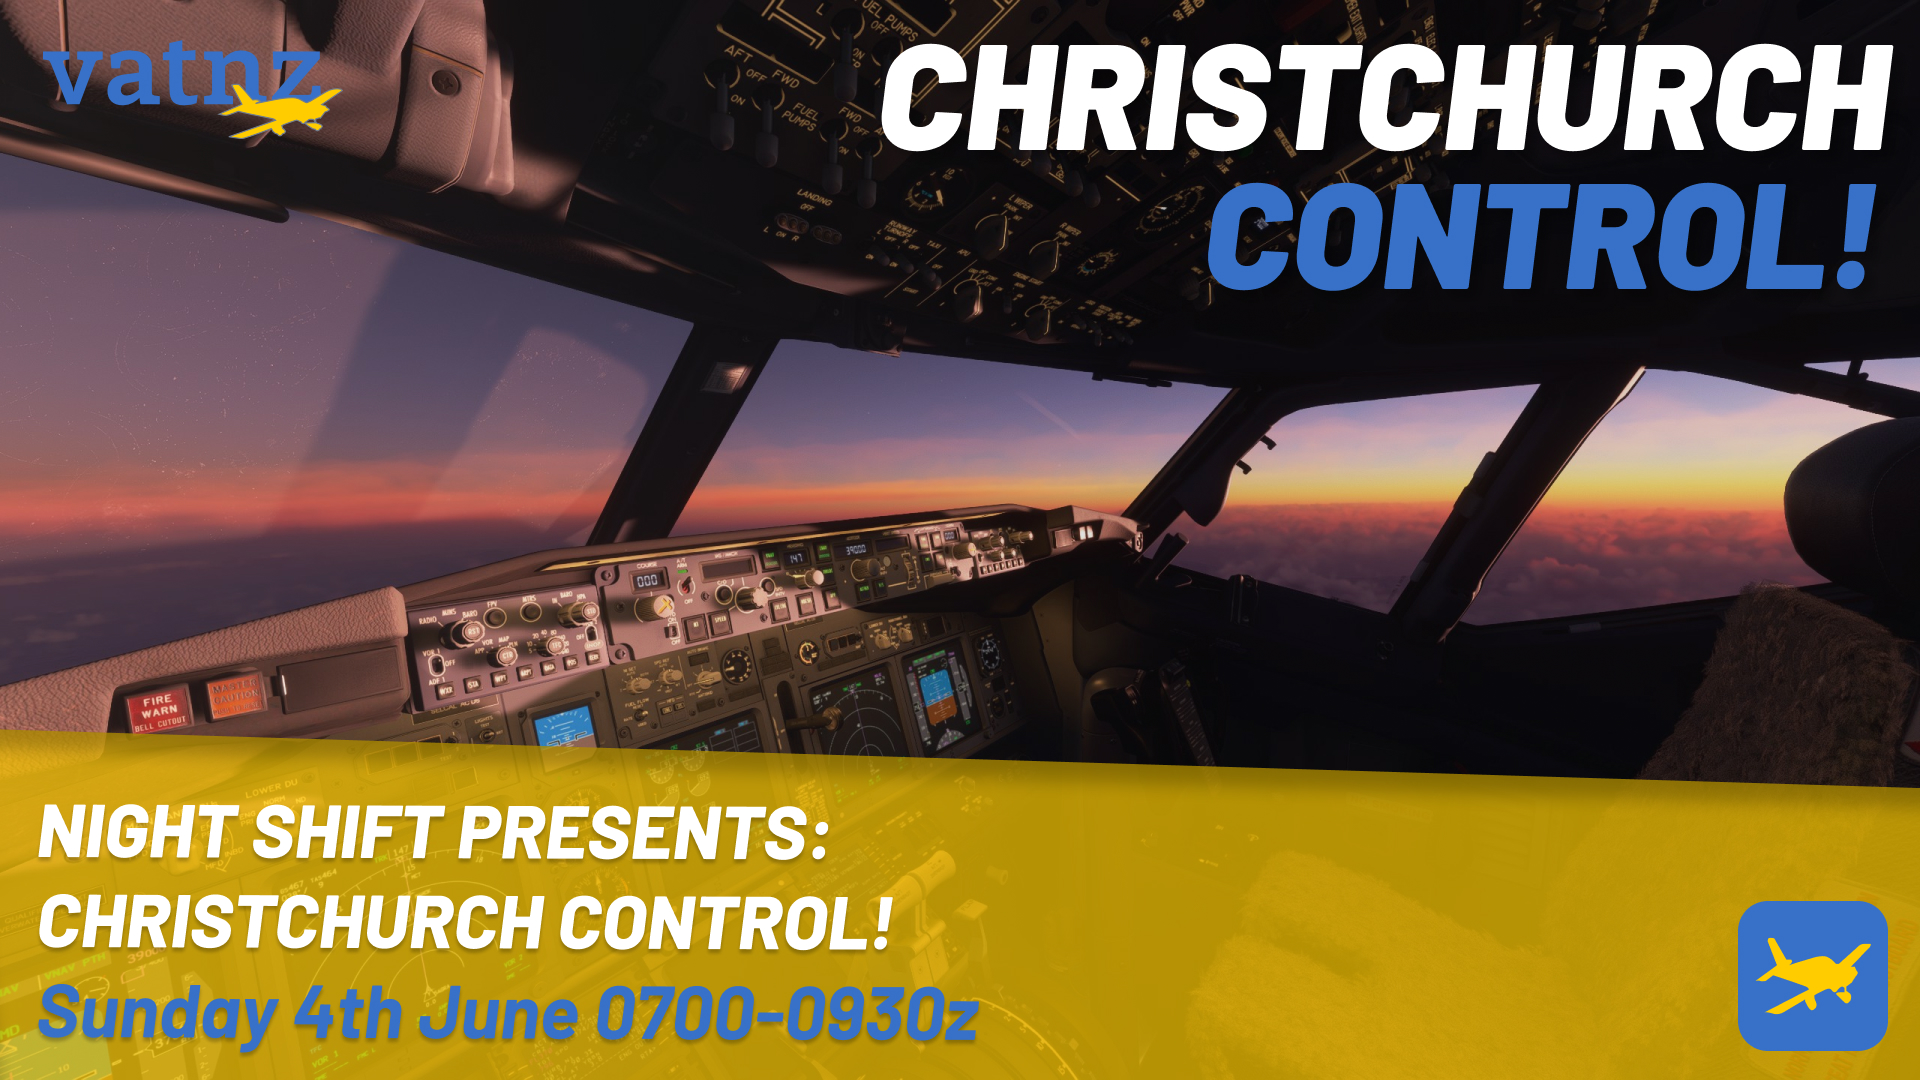 Night Shift Presents: Christchurch Control!